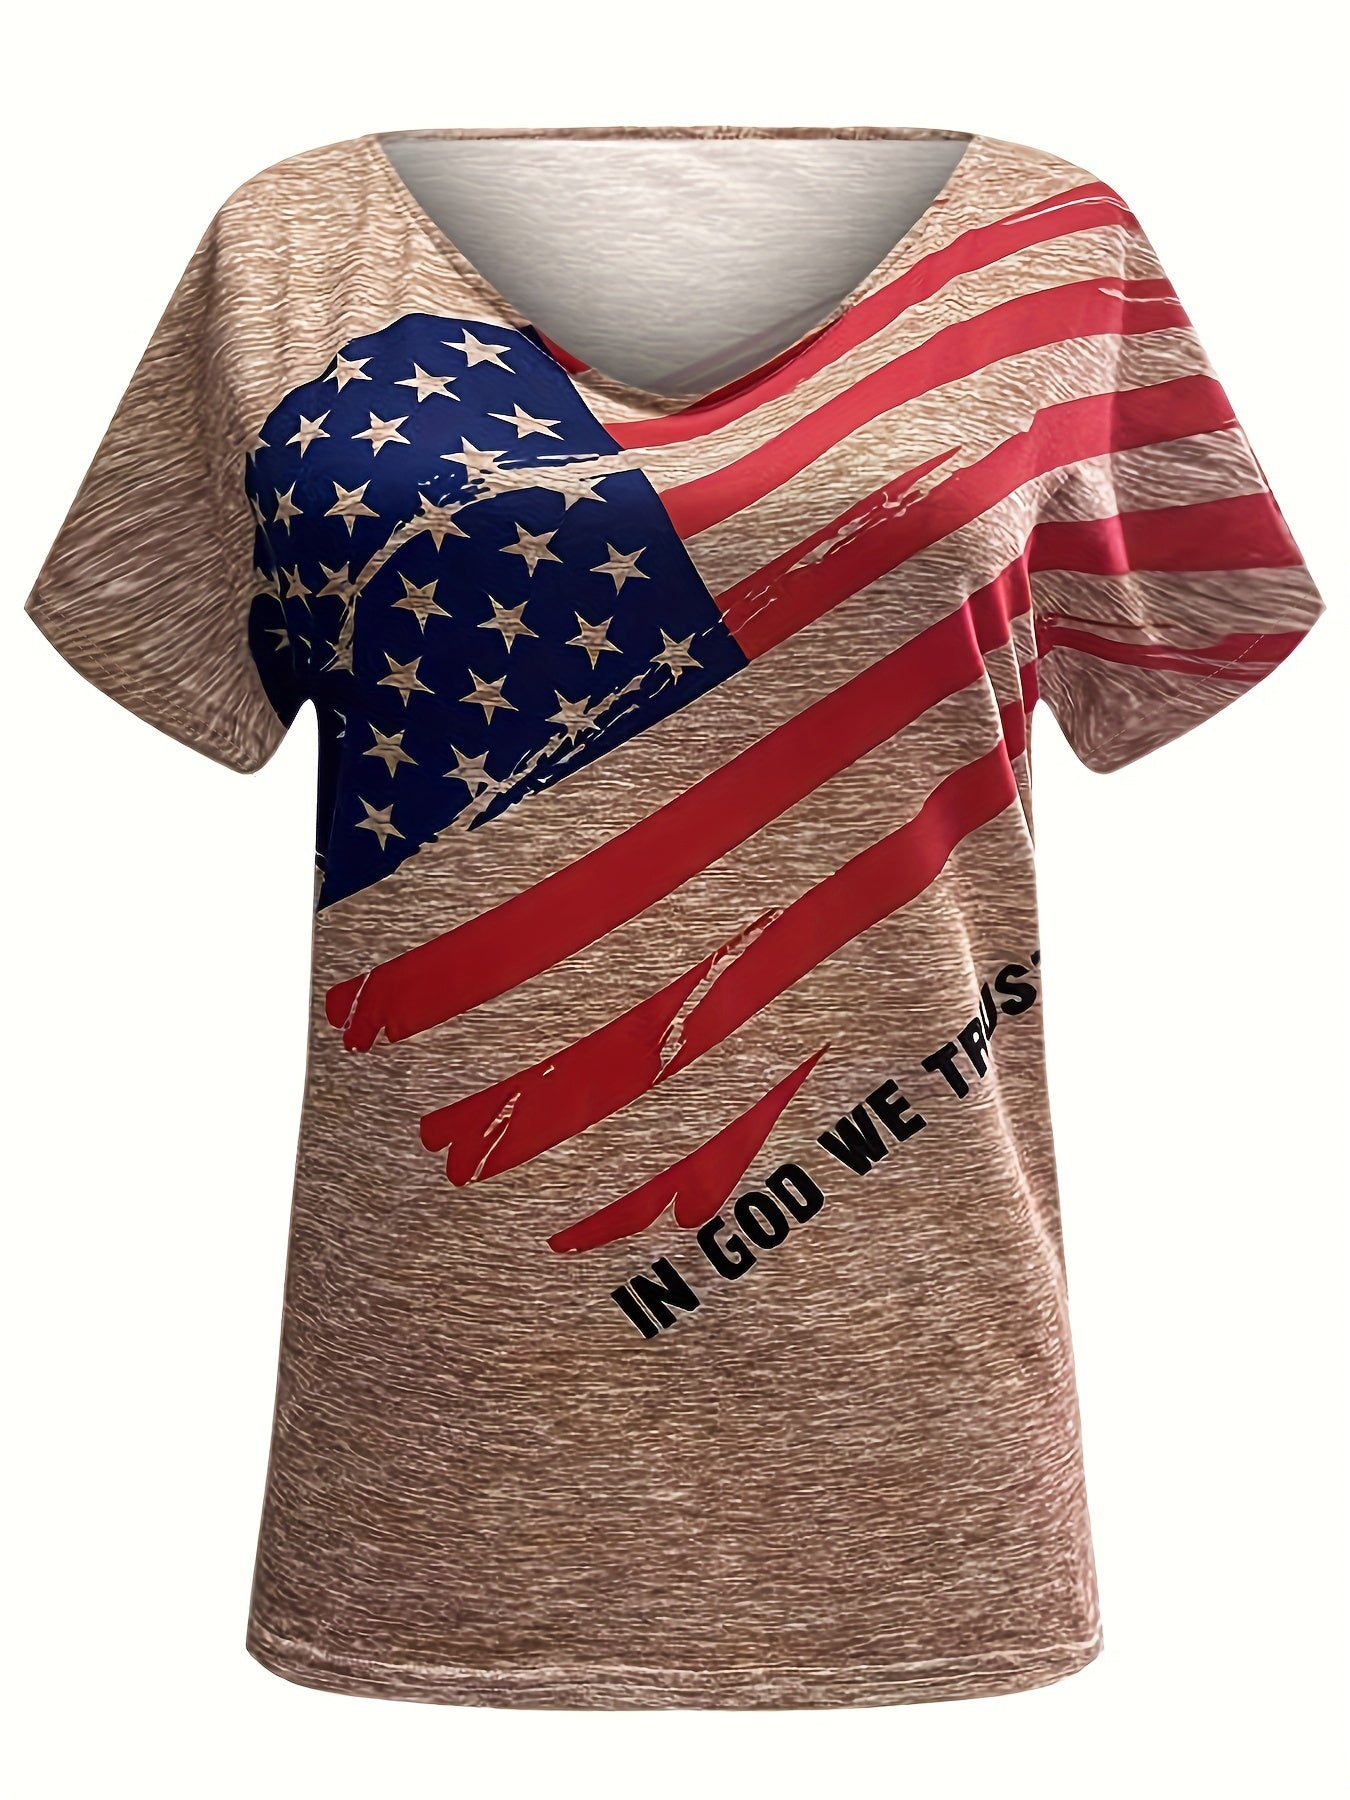 In God We Trust Patriotic American Flag Plus Size Women's Christian T-shirt claimedbygoddesigns